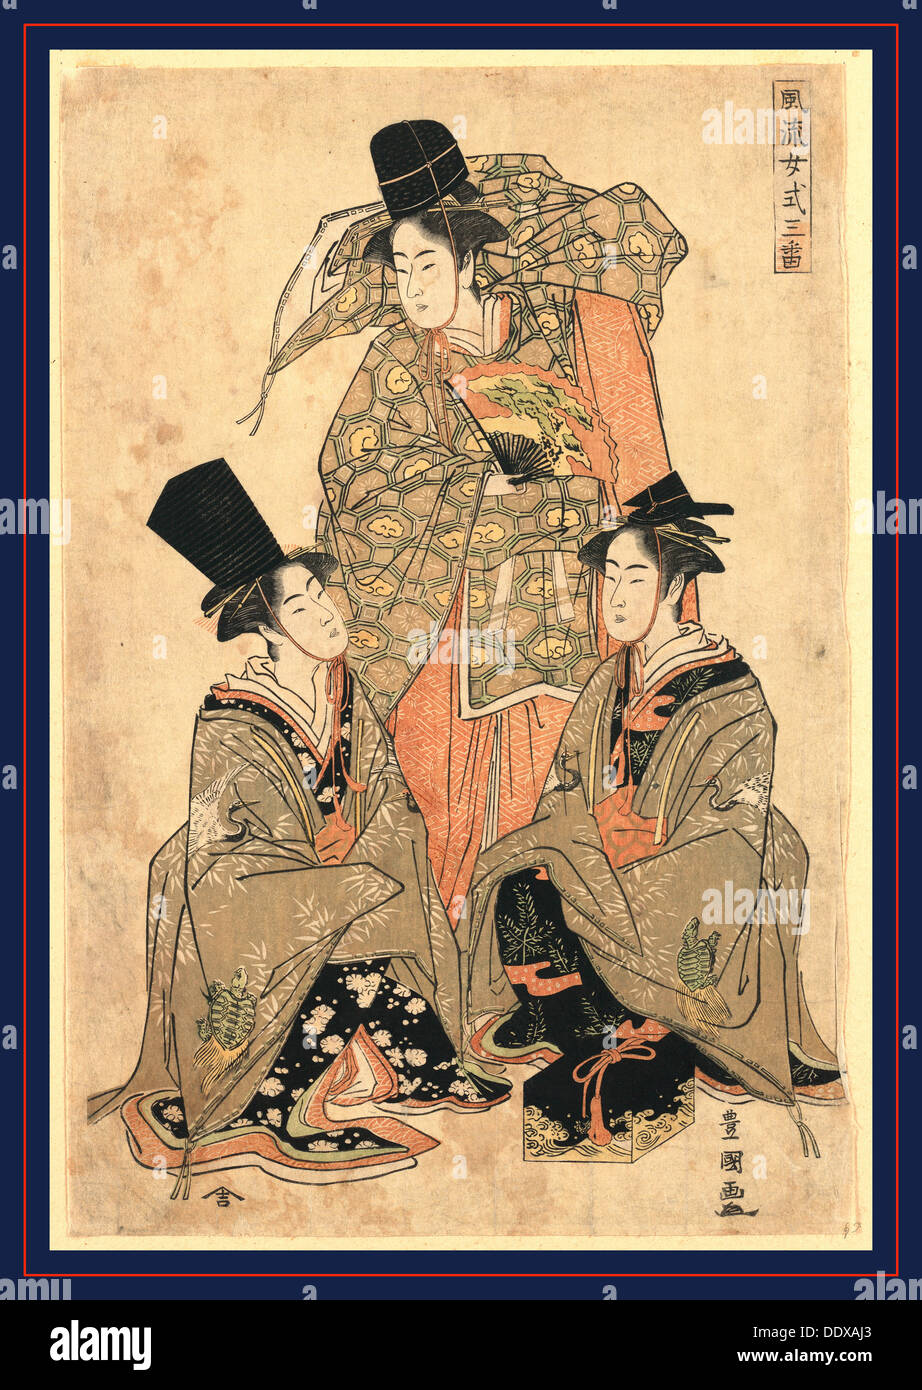 Furyu onna shikisanba, Utagawa [1788 or 1789], 1 print : woodcut, color ; 37.8 x 25.5 cm., Print shows three women (or the male Stock Photo